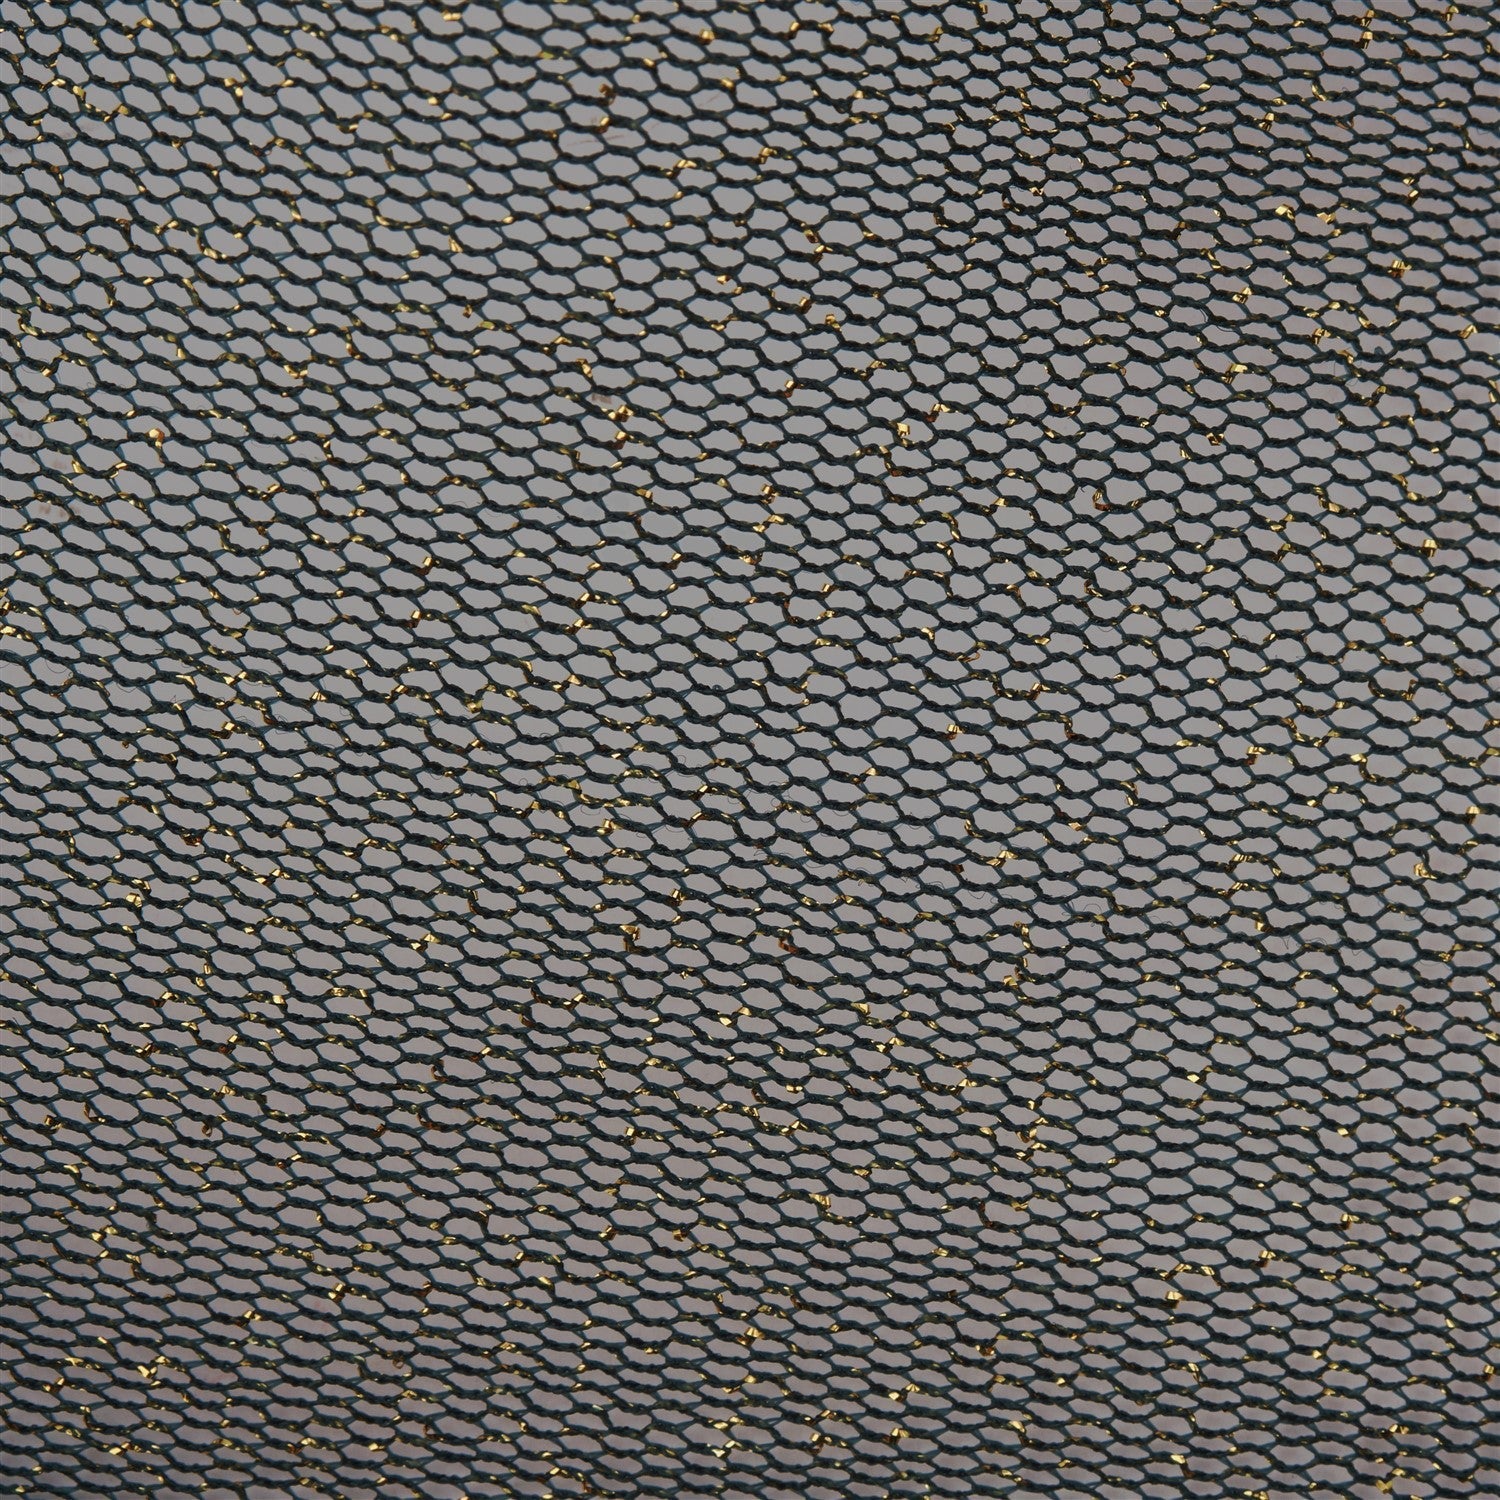 Metallic Tulle Fabric